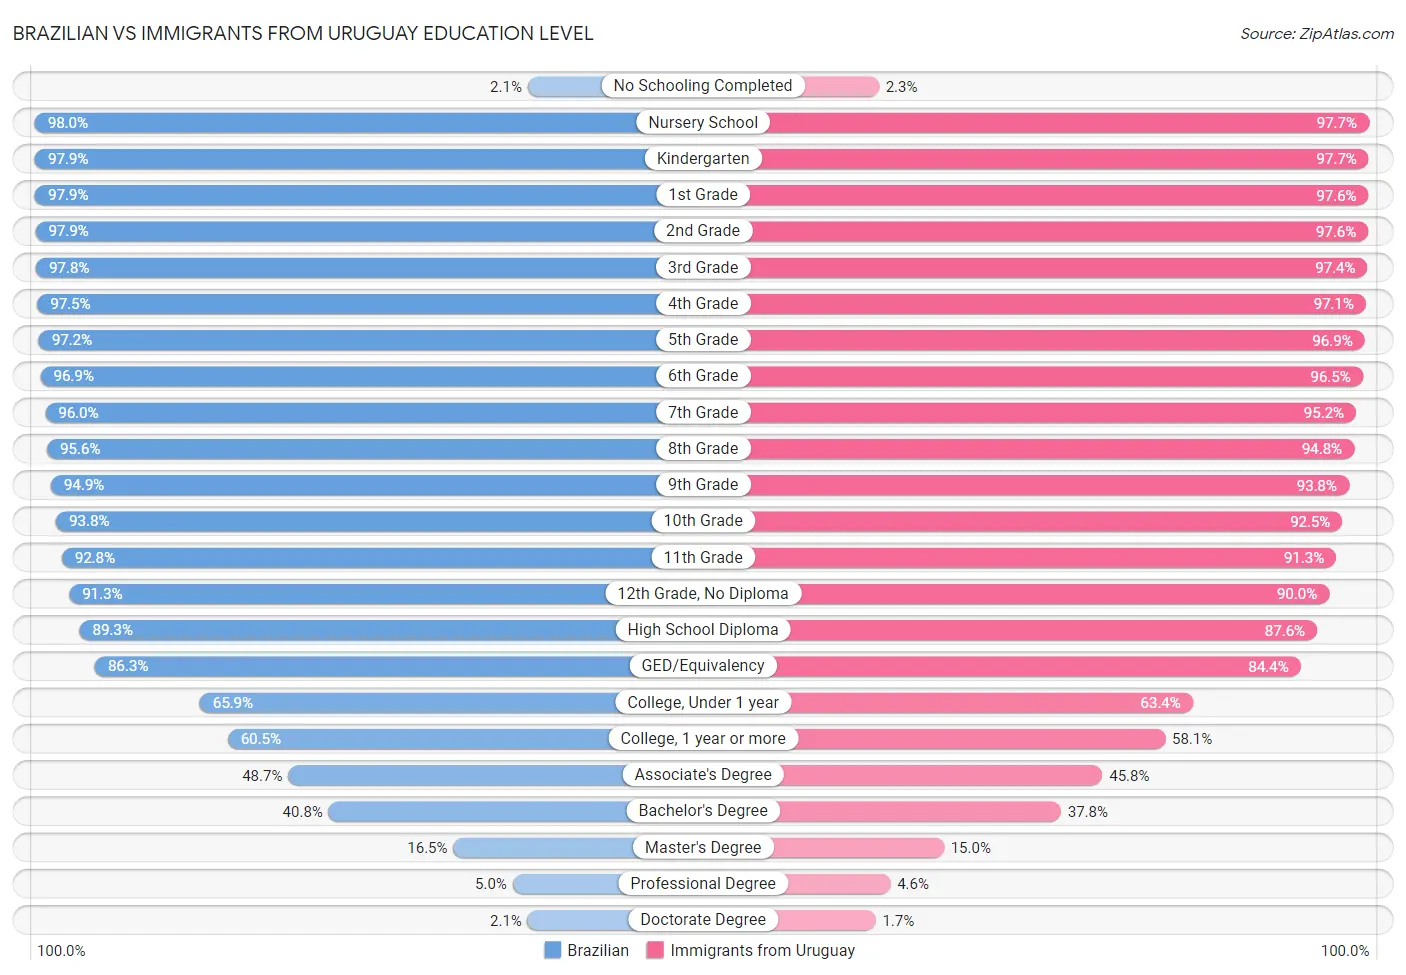 Brazilian vs Immigrants from Uruguay Education Level